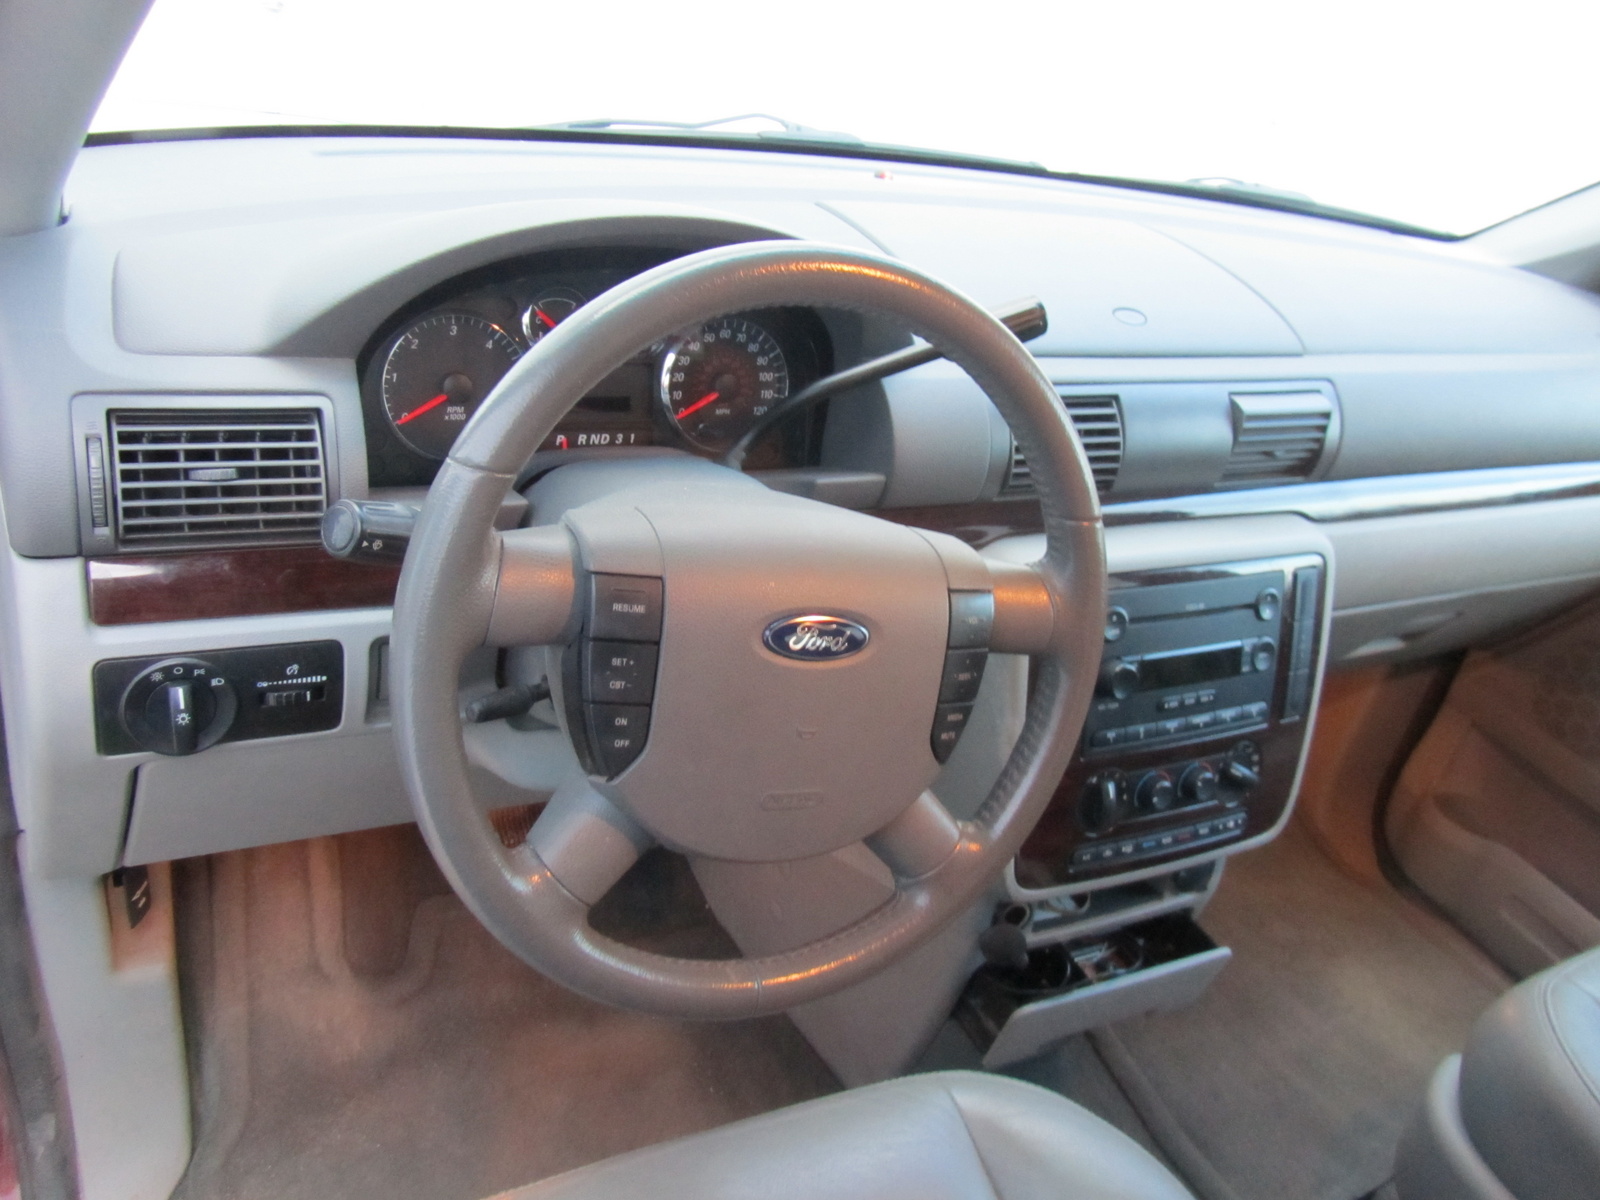 Ford freestar interior photos #7